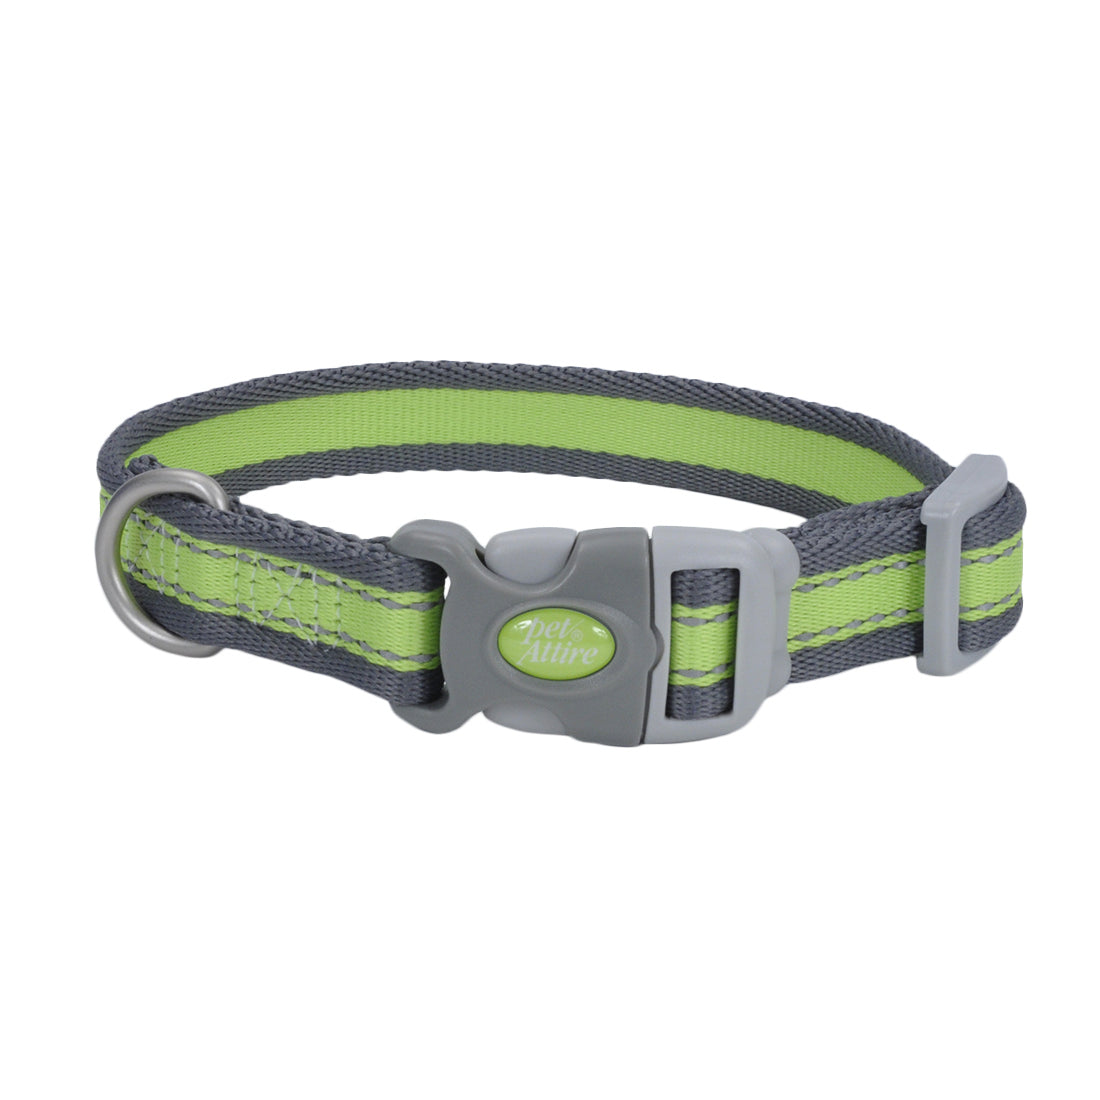 Coastal Pet Attire Pro Adjustable Reflective Collar 8-12" - 3/4" Green with Gray